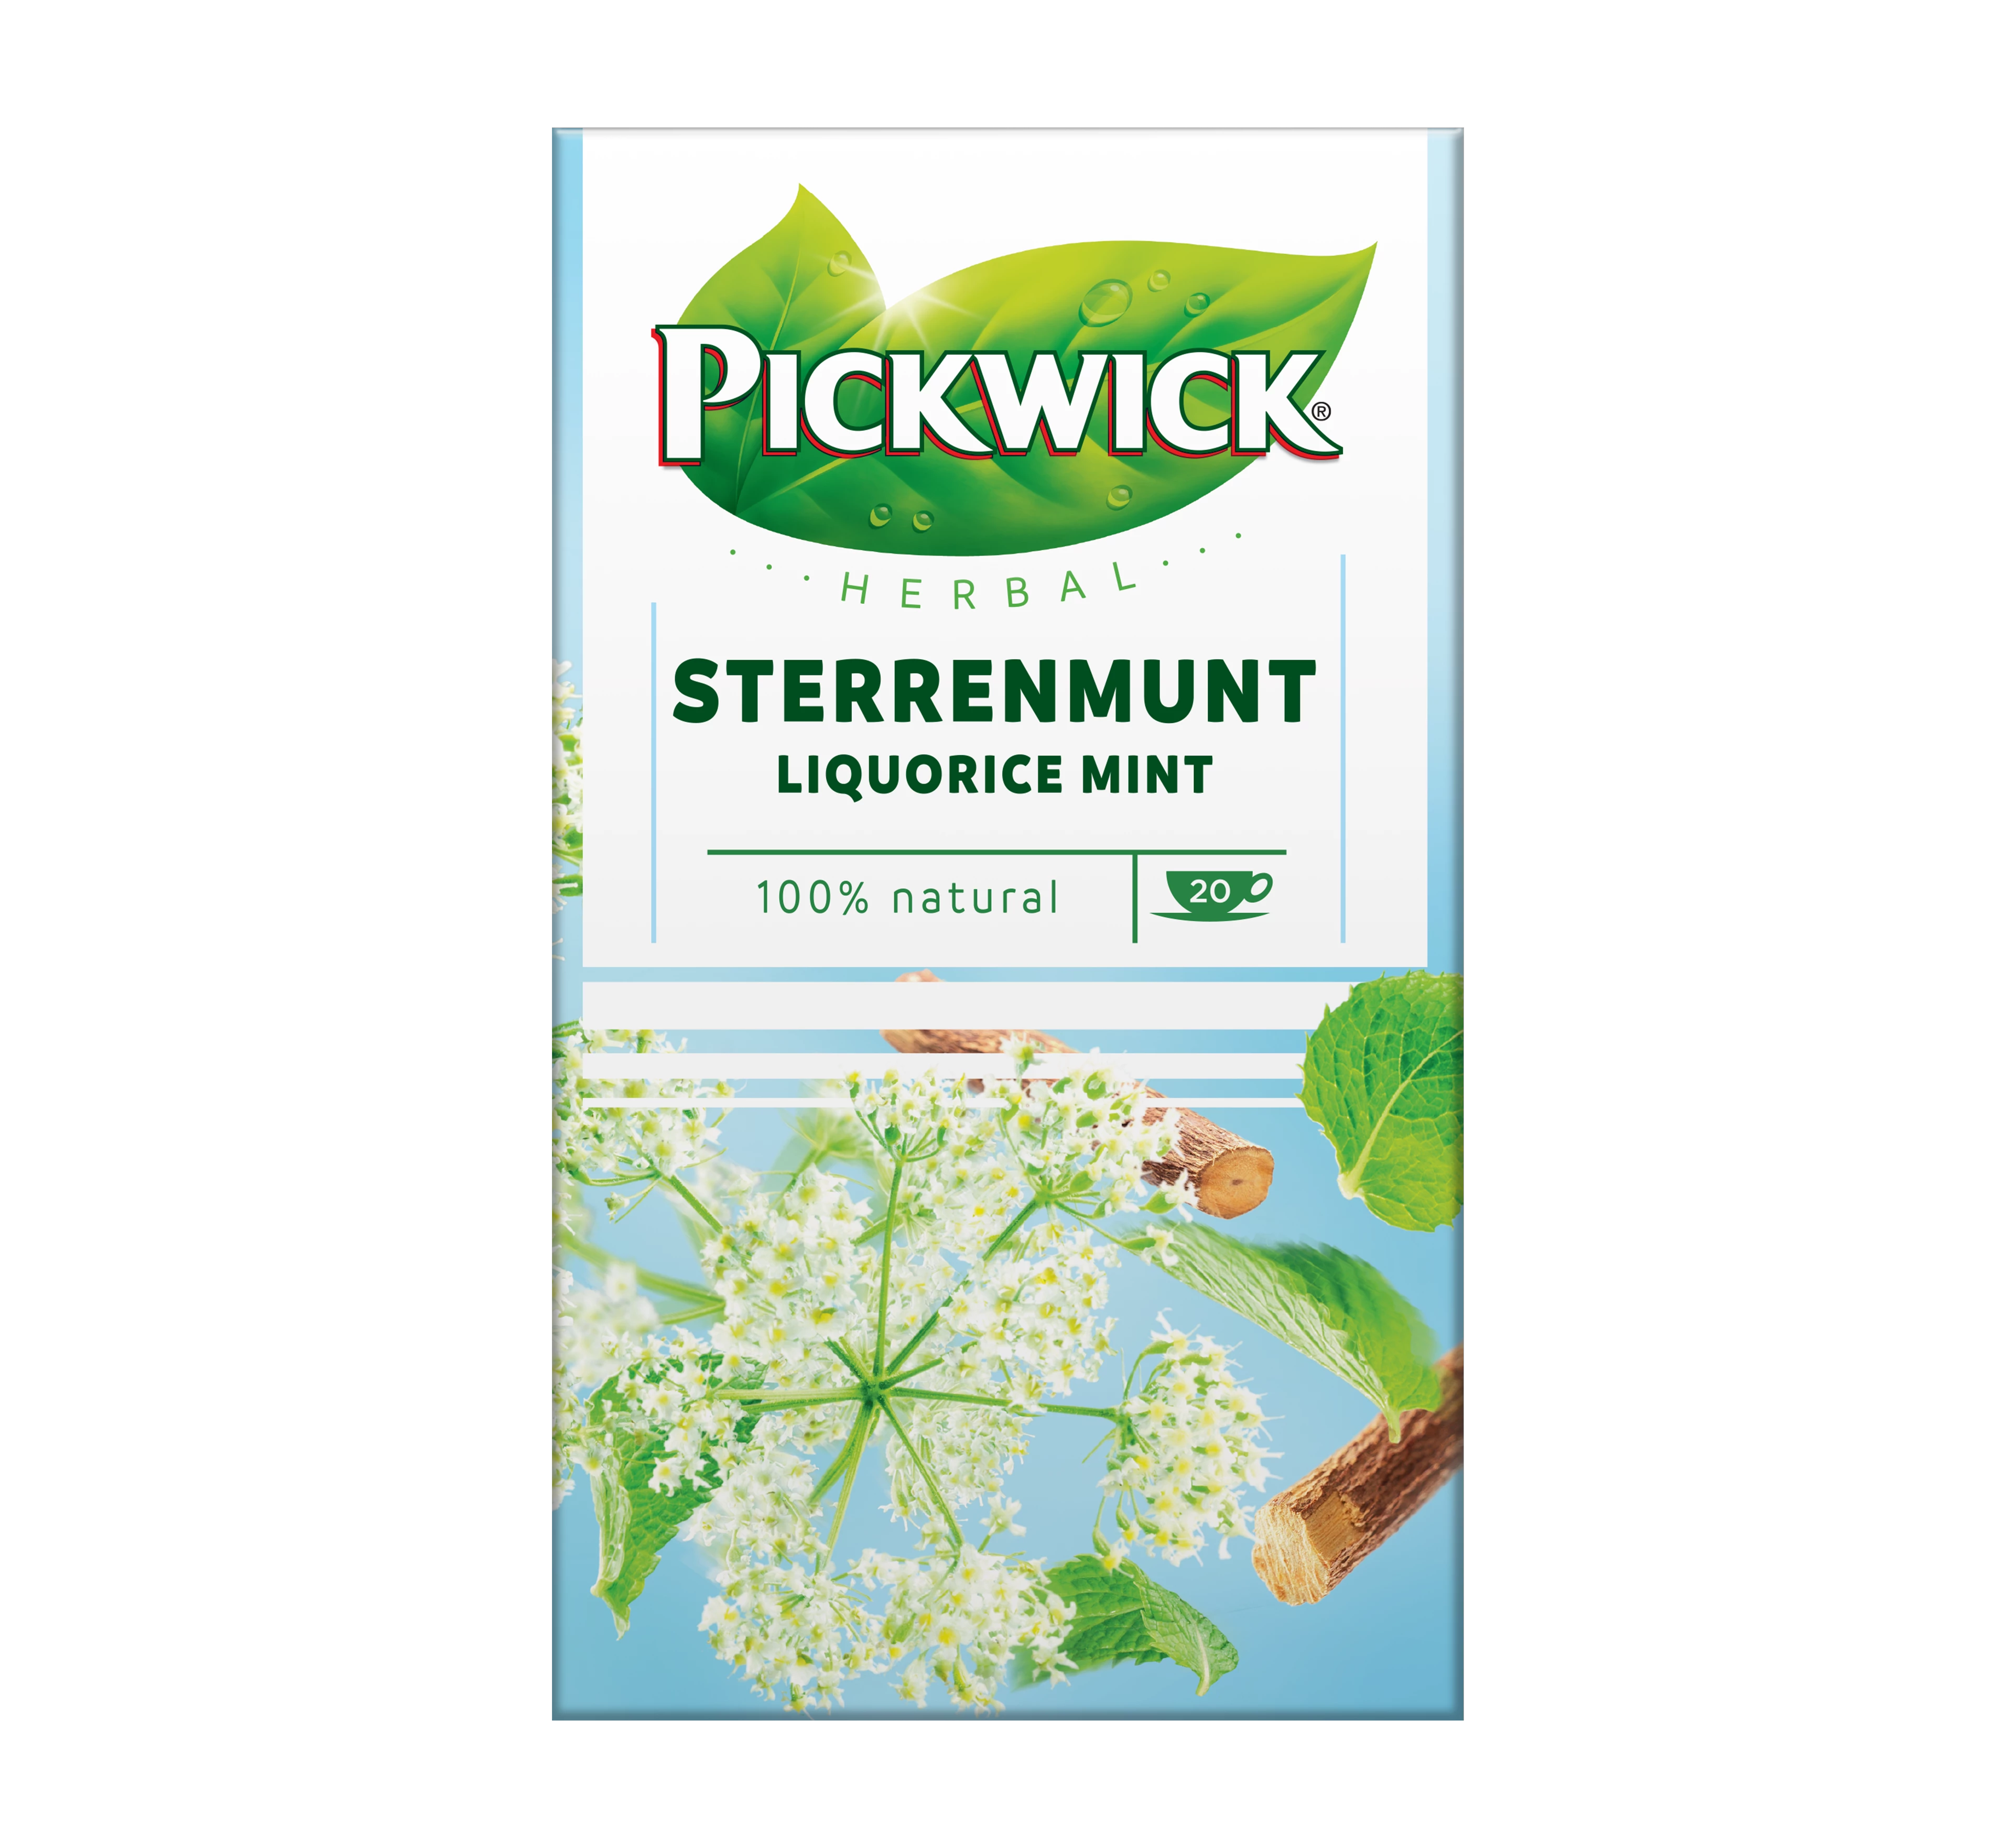 Pickwick sterrenmunt packshot visual